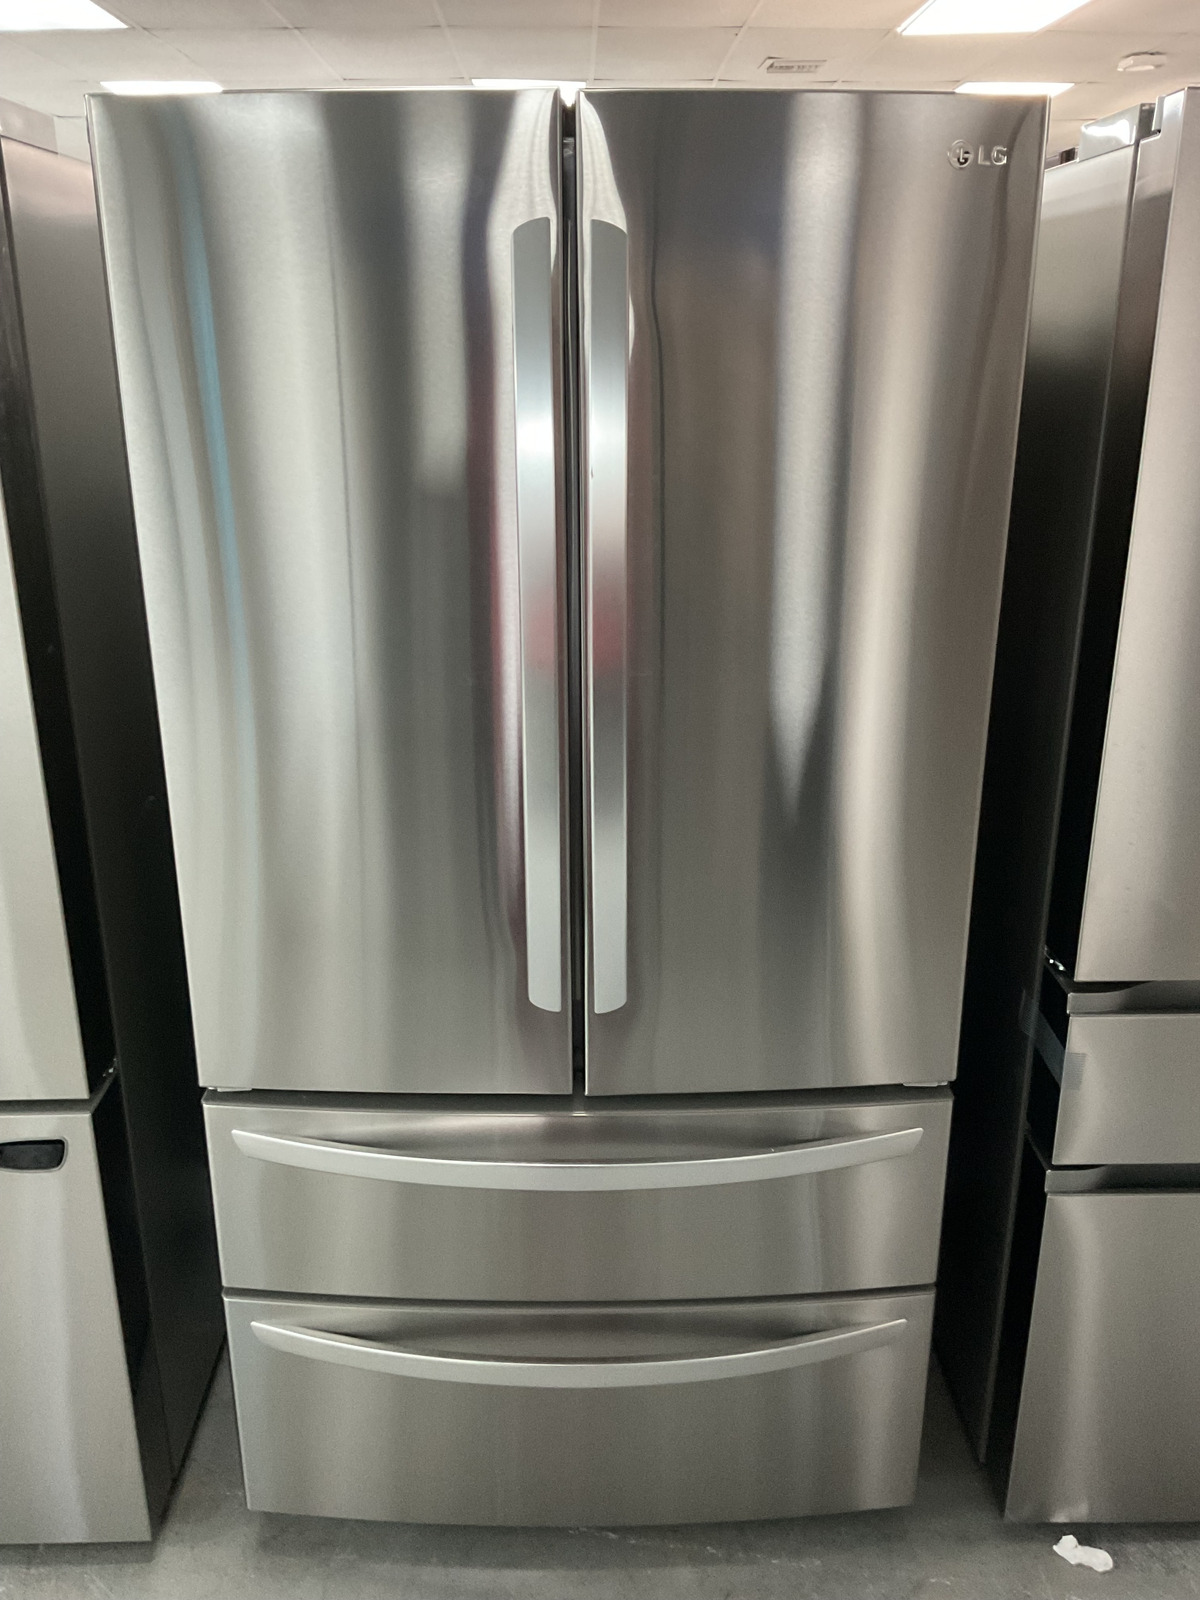 Lg Electronics - French Door (Refrigerator) - LMWS27626S